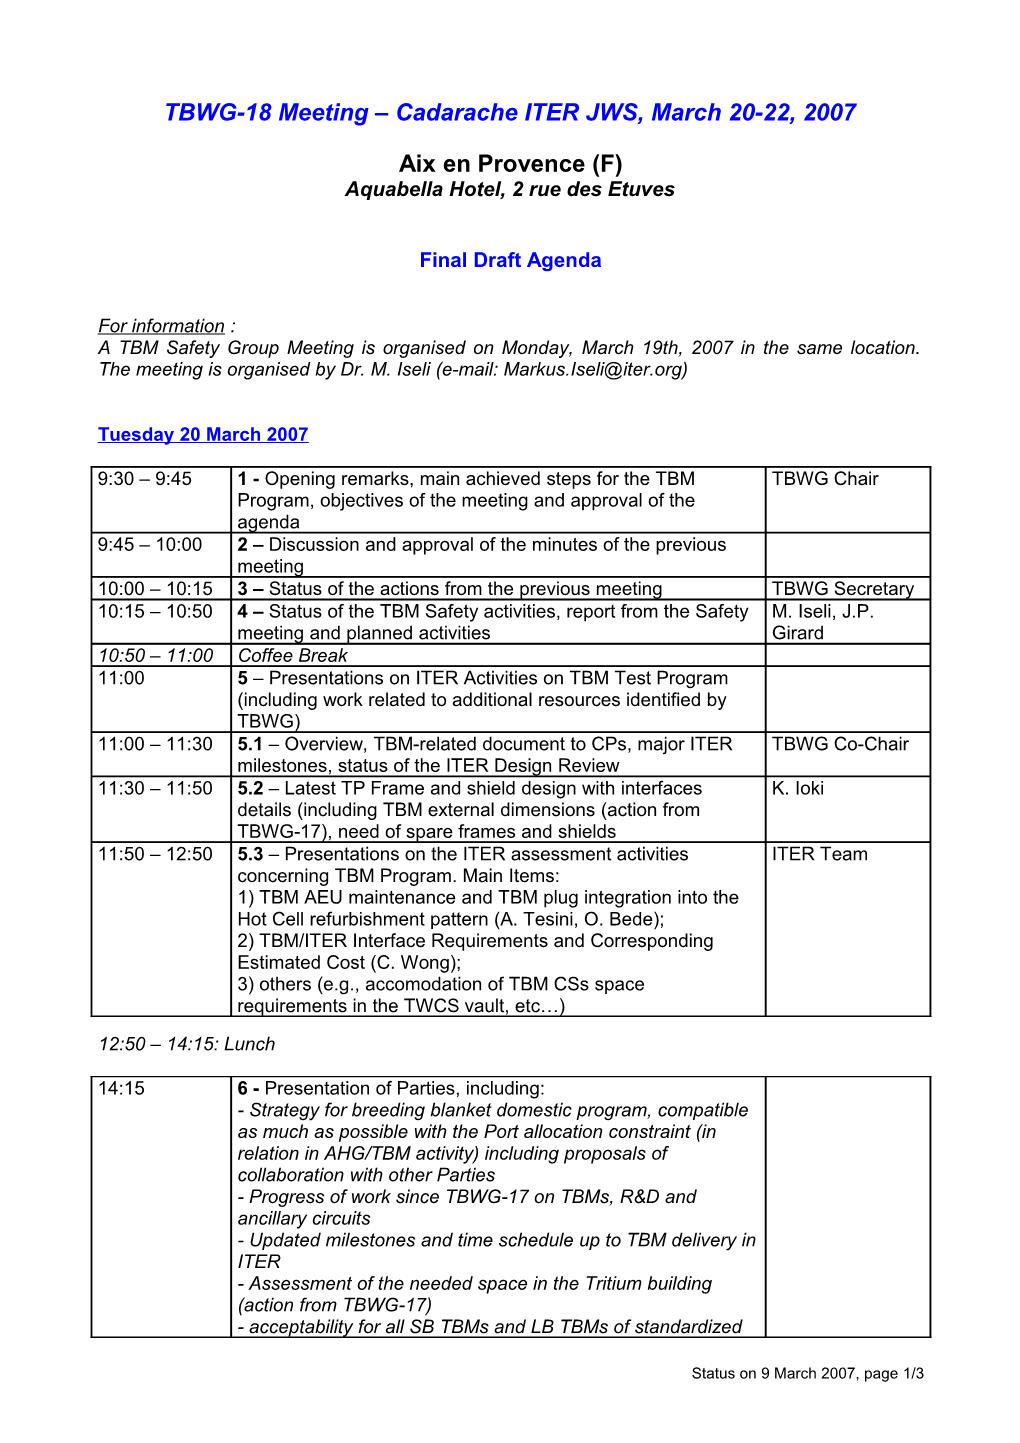 Draft Agenda TBWG-11